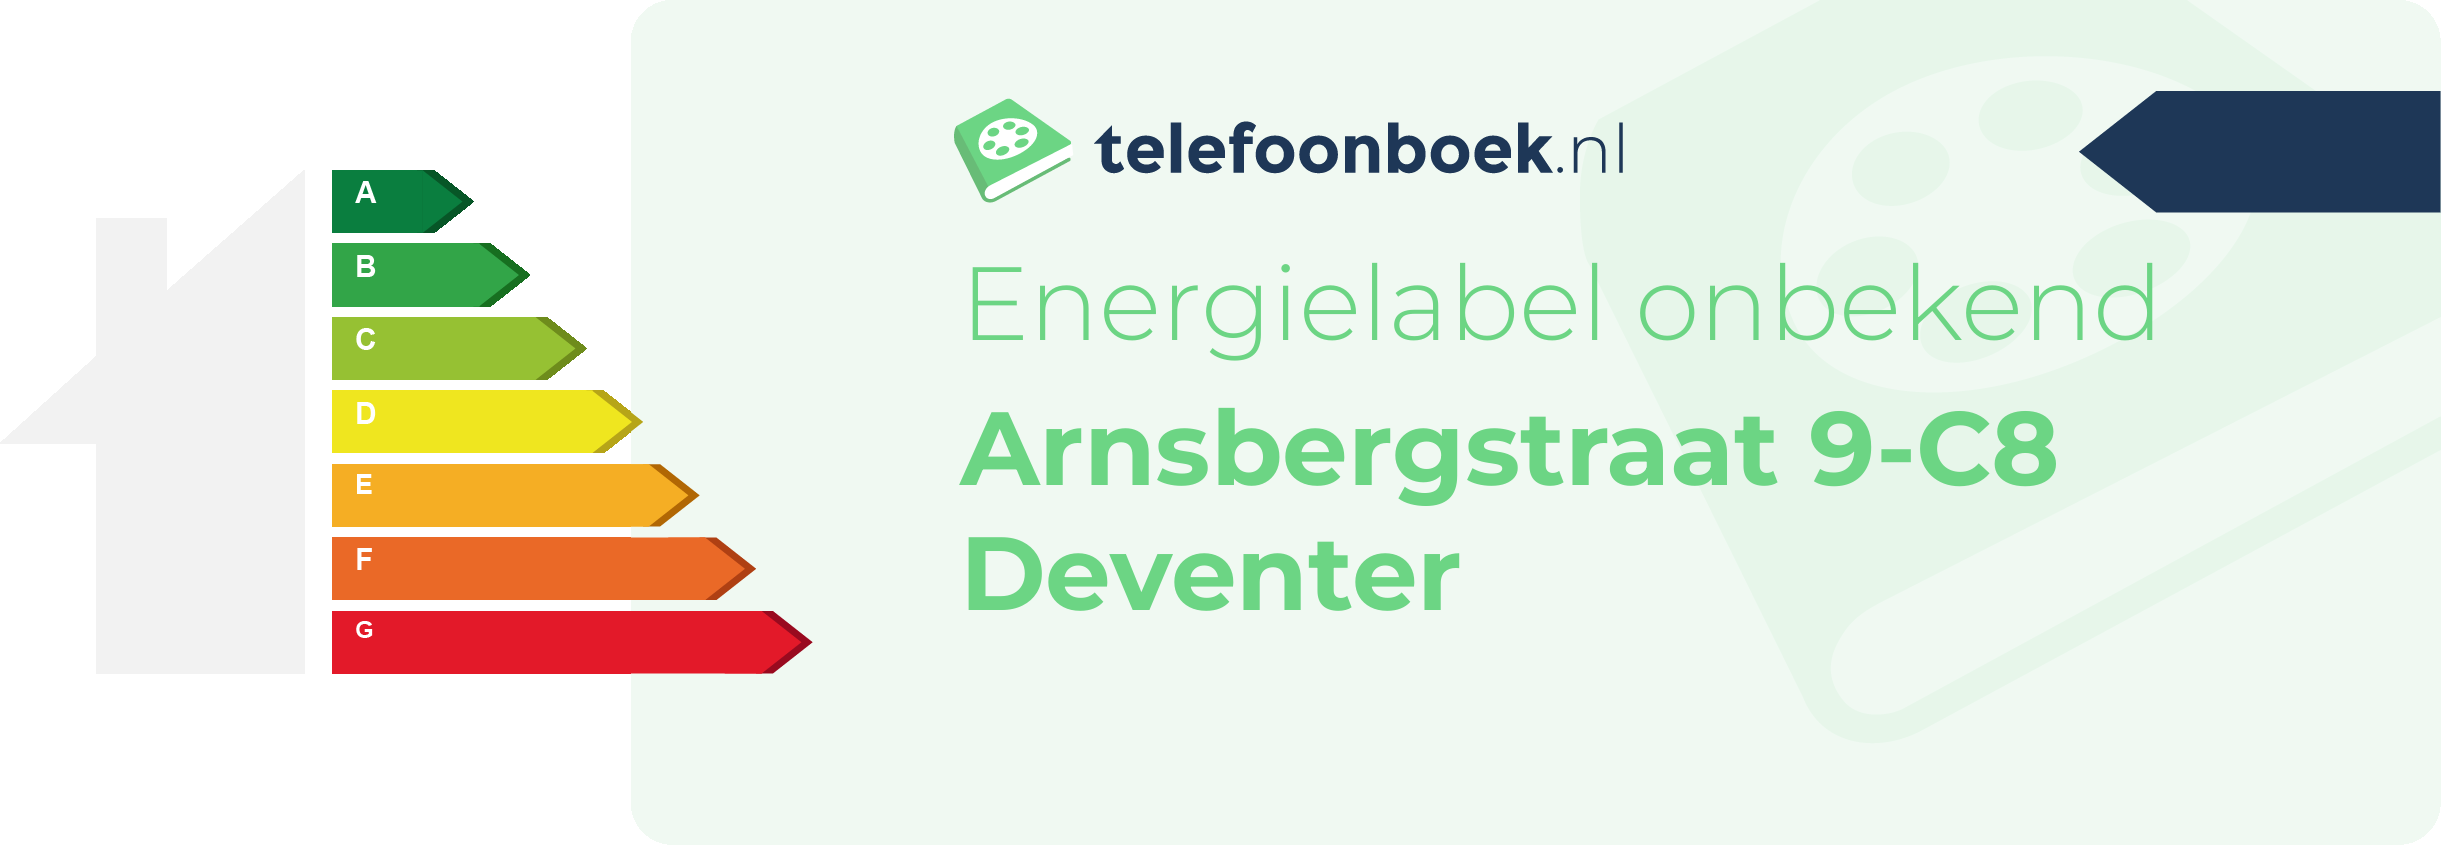 Energielabel Arnsbergstraat 9-C8 Deventer